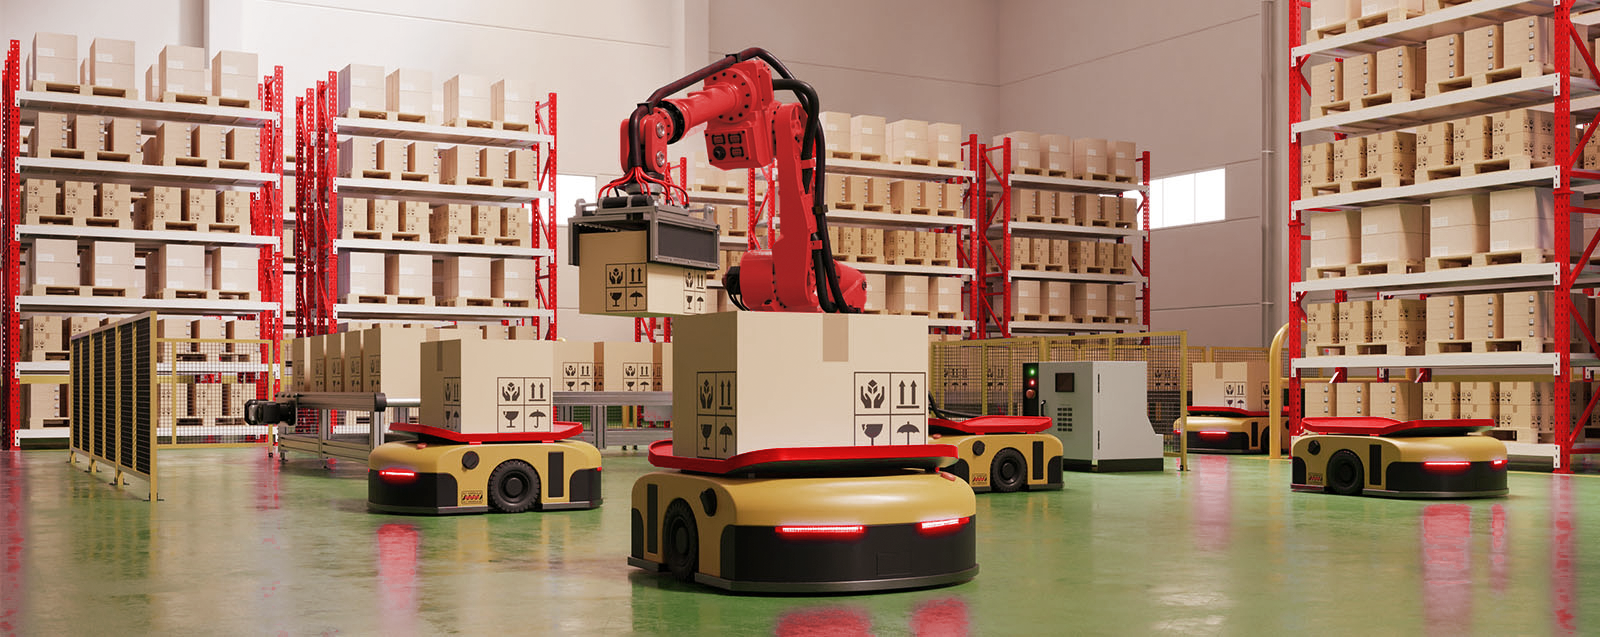 warehouse automation with next generation robotics intelligence